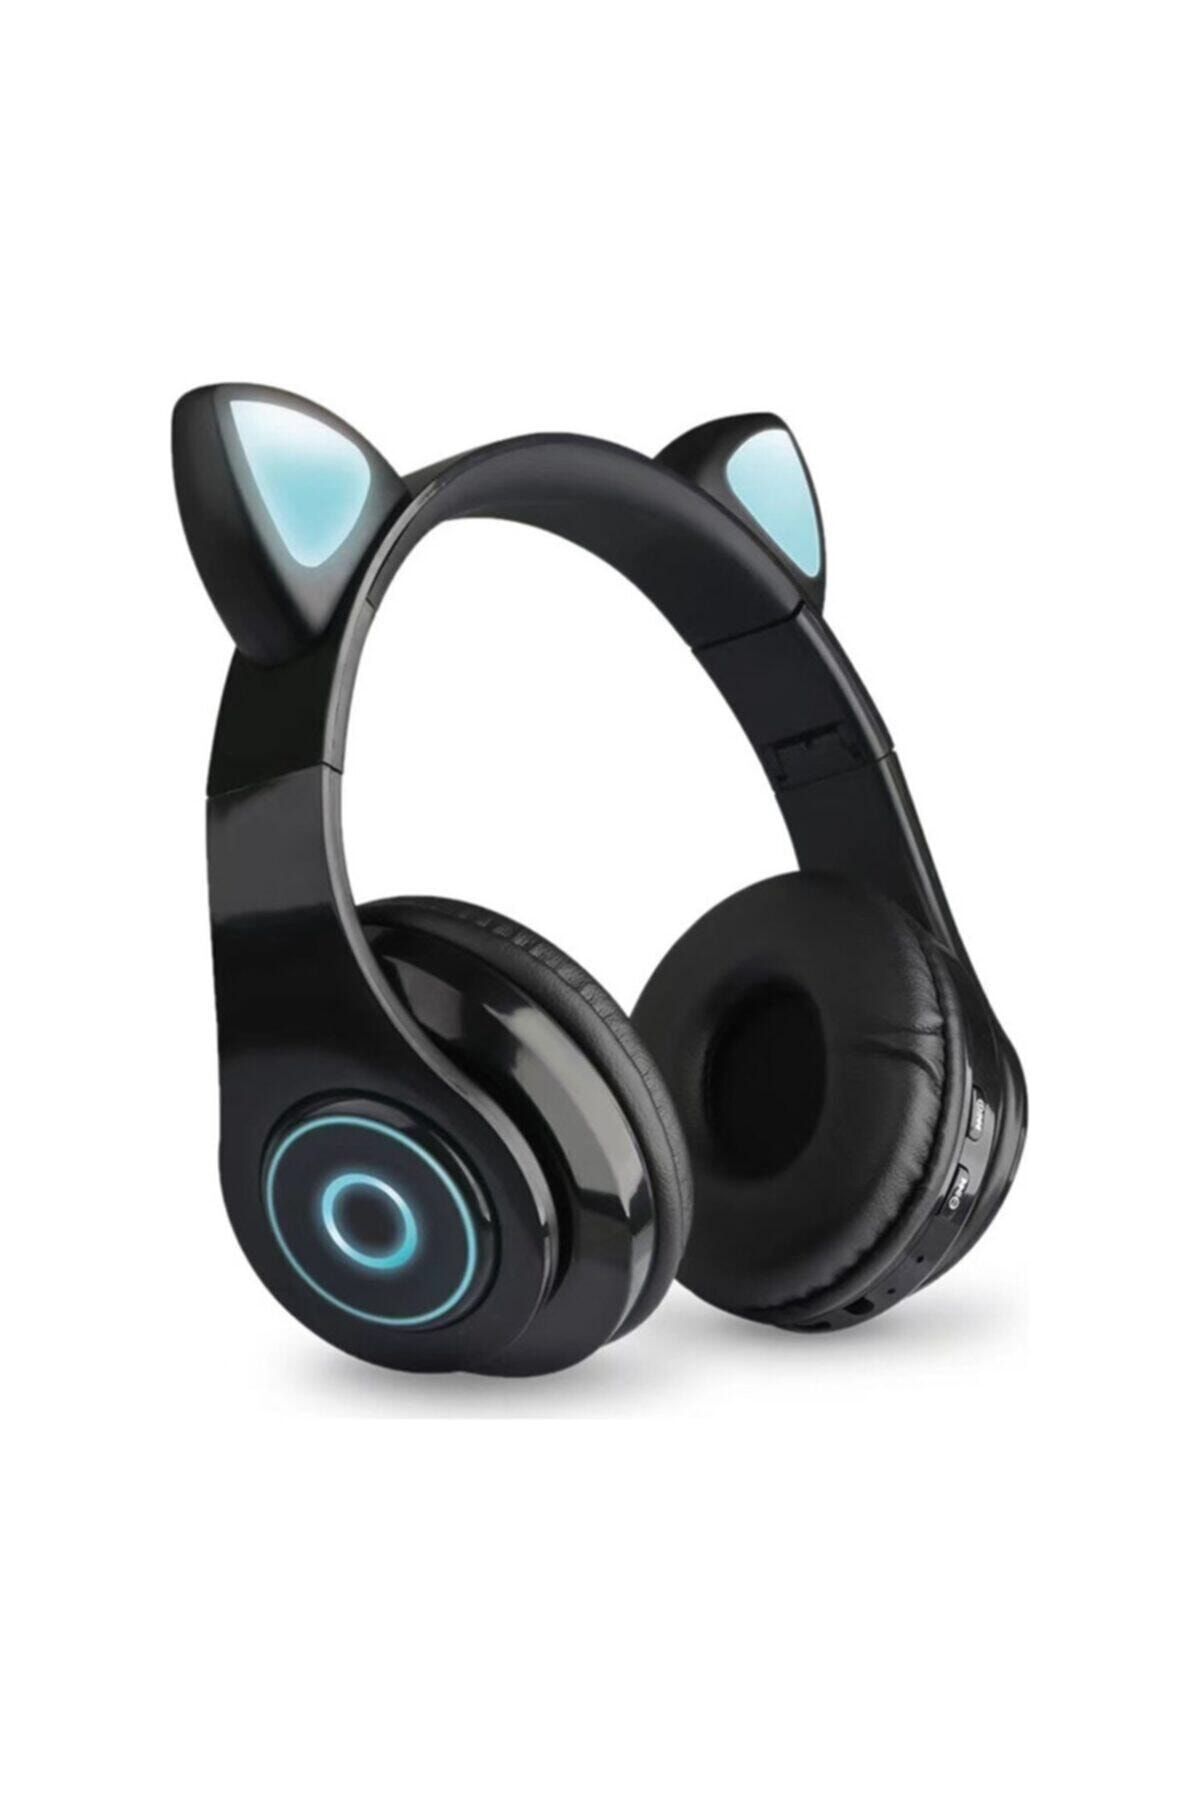 BLUPPLE B-39 Kablosuz Bluetooth 5.0 Wireless Led Işıklı Kedili Kulaküstü Kulaklık Çocuk Siyah Kız